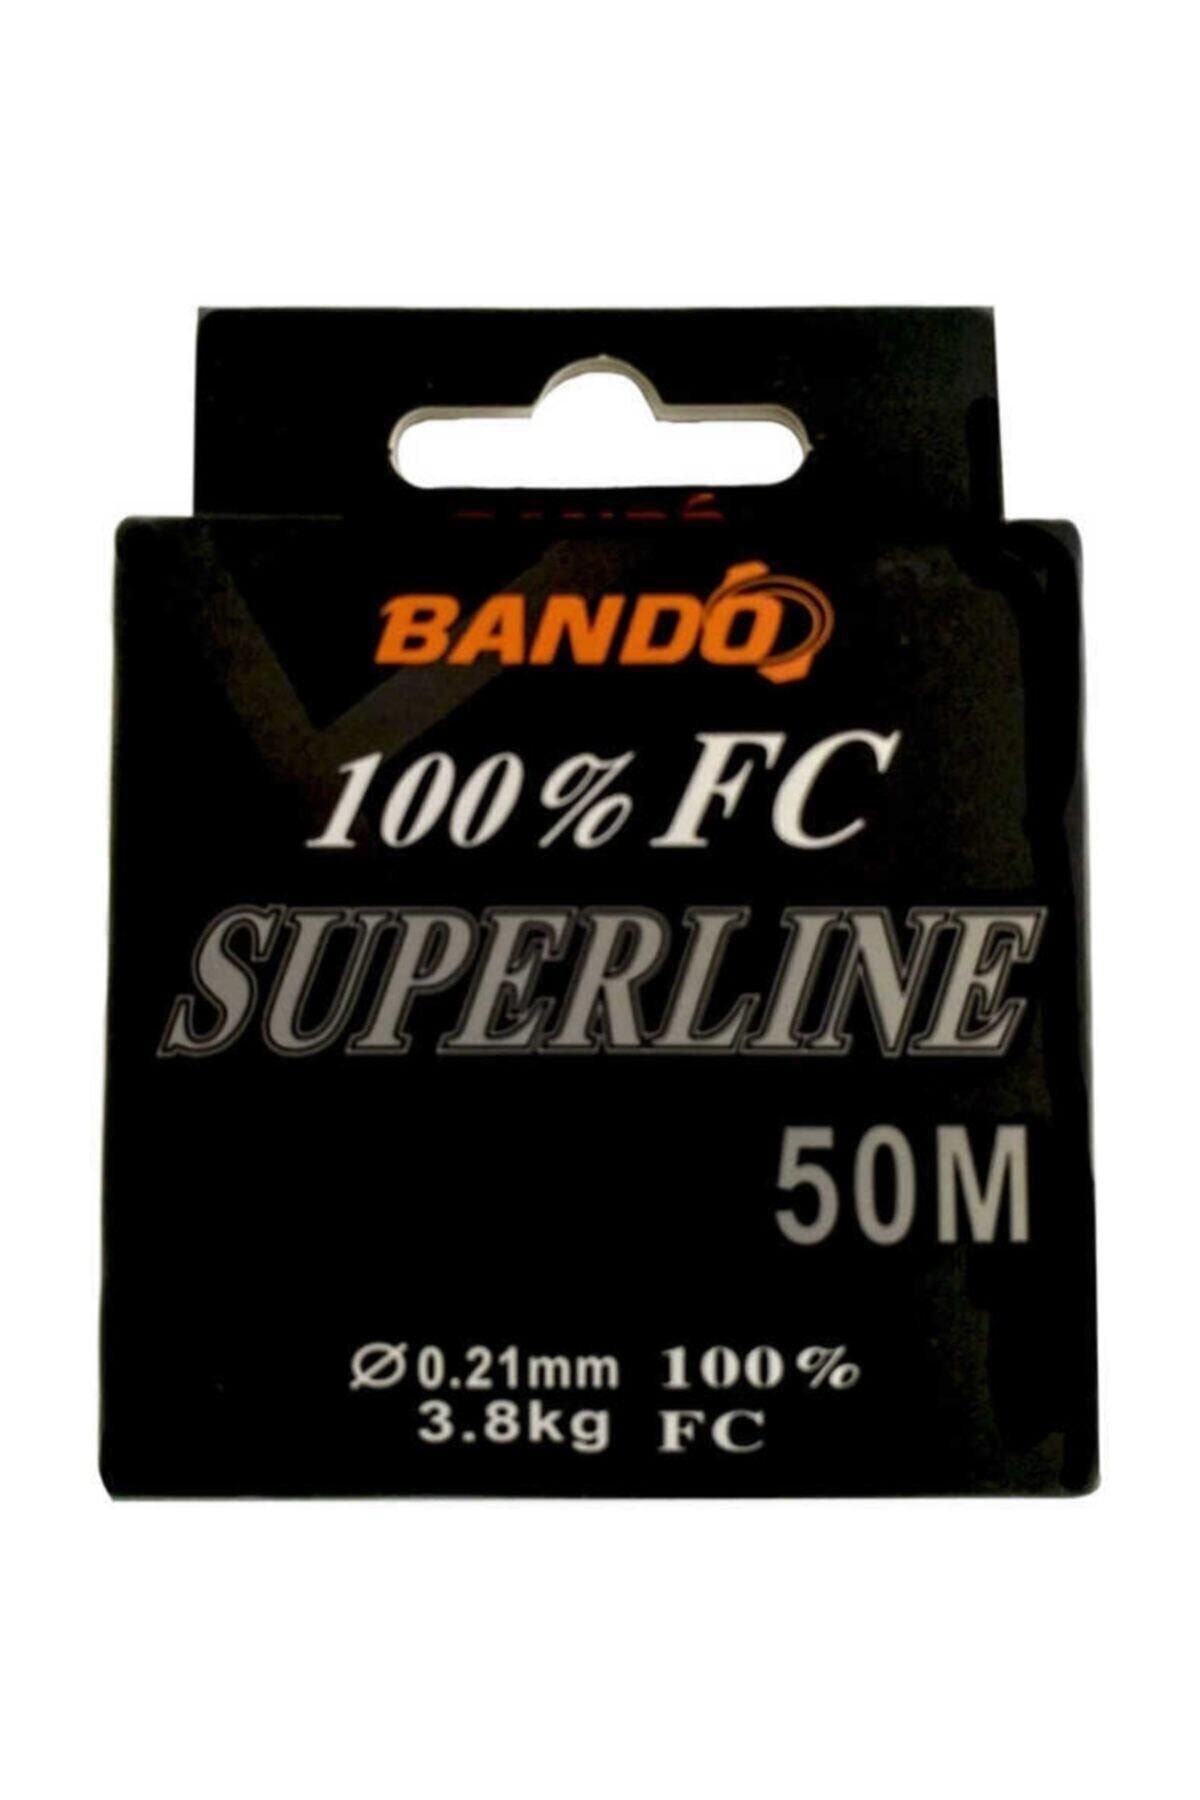 Bando Superline 100 % Fc Misina 50 Mt.